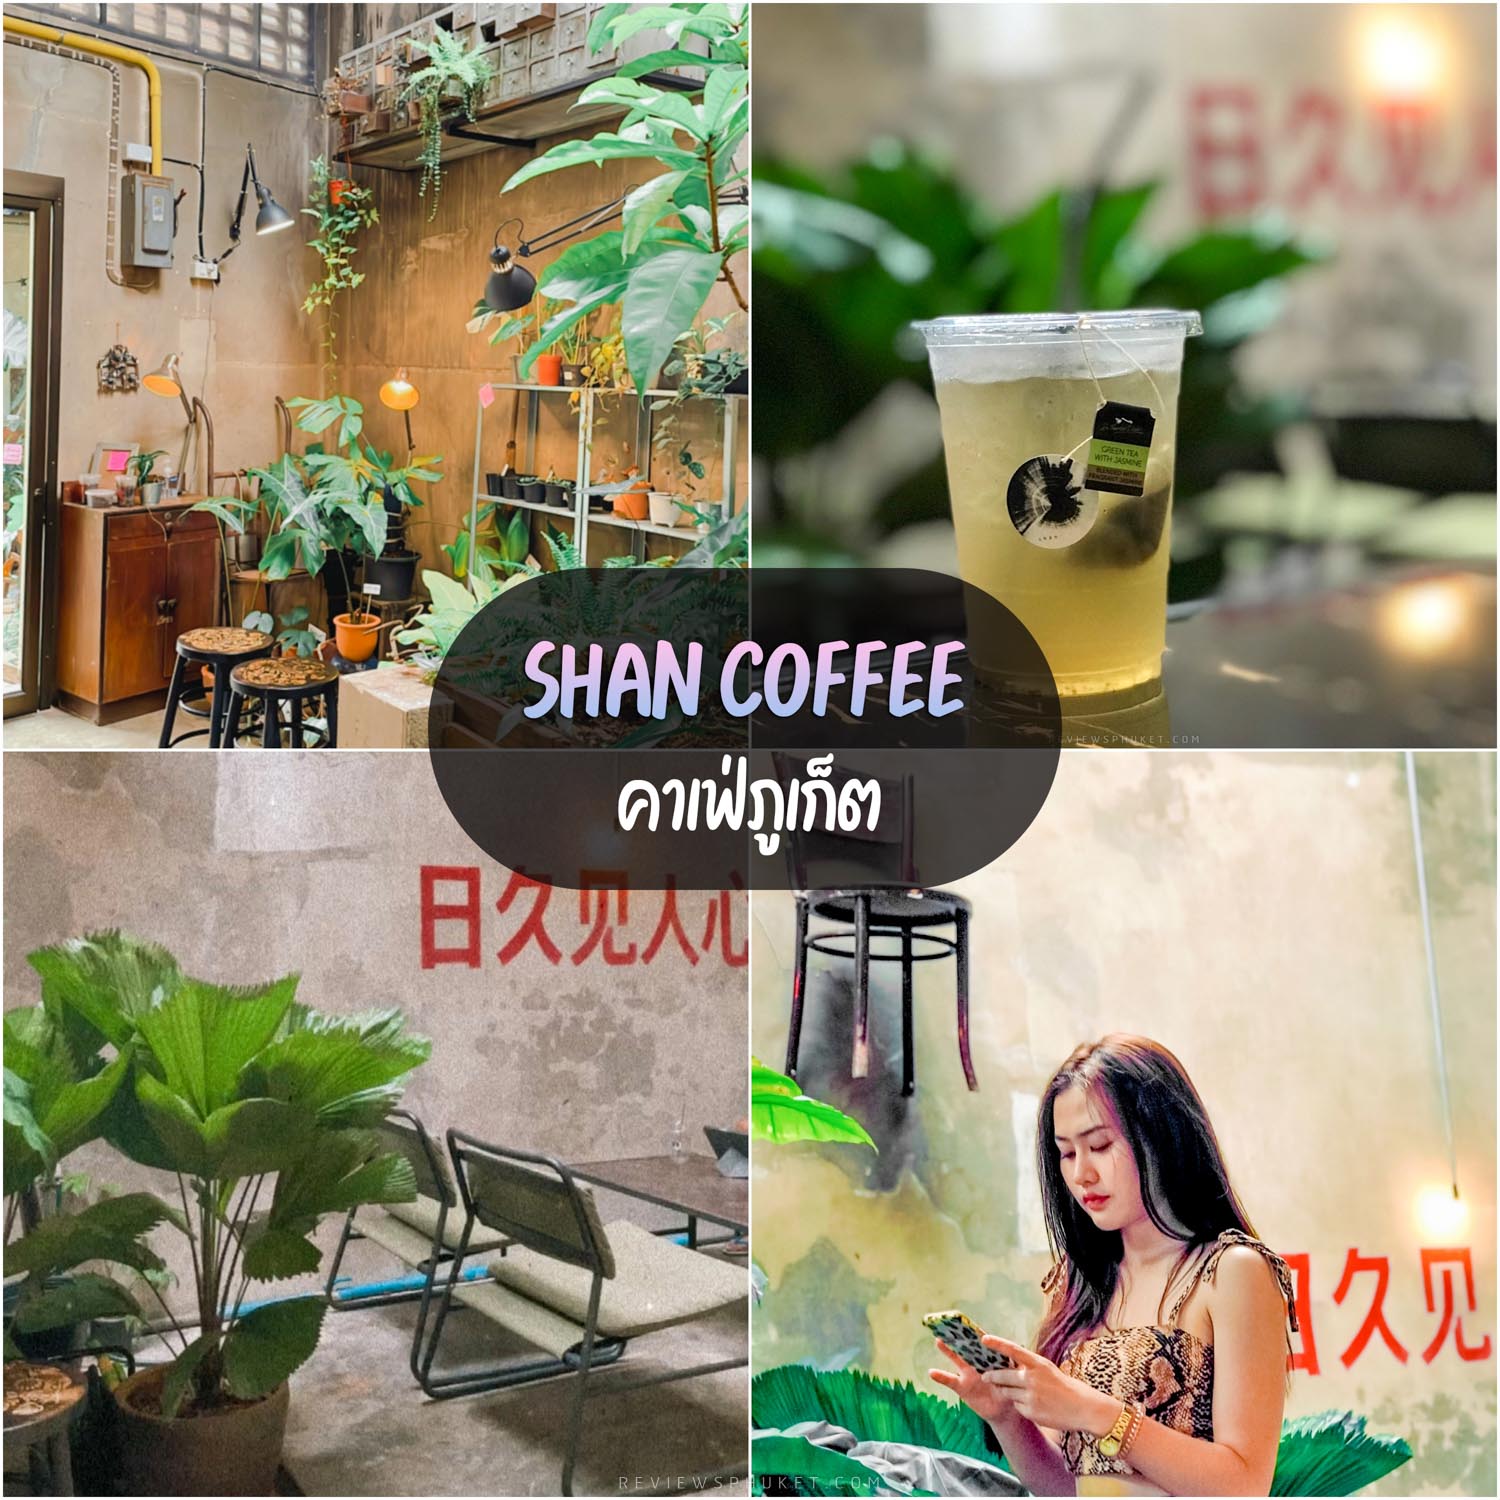 Shan coffee คาเฟ่ภูเก็ต ร้านกาแฟลับๆ ตกแต่งสไตล์ไม่เหมือนใคร กาแฟดี